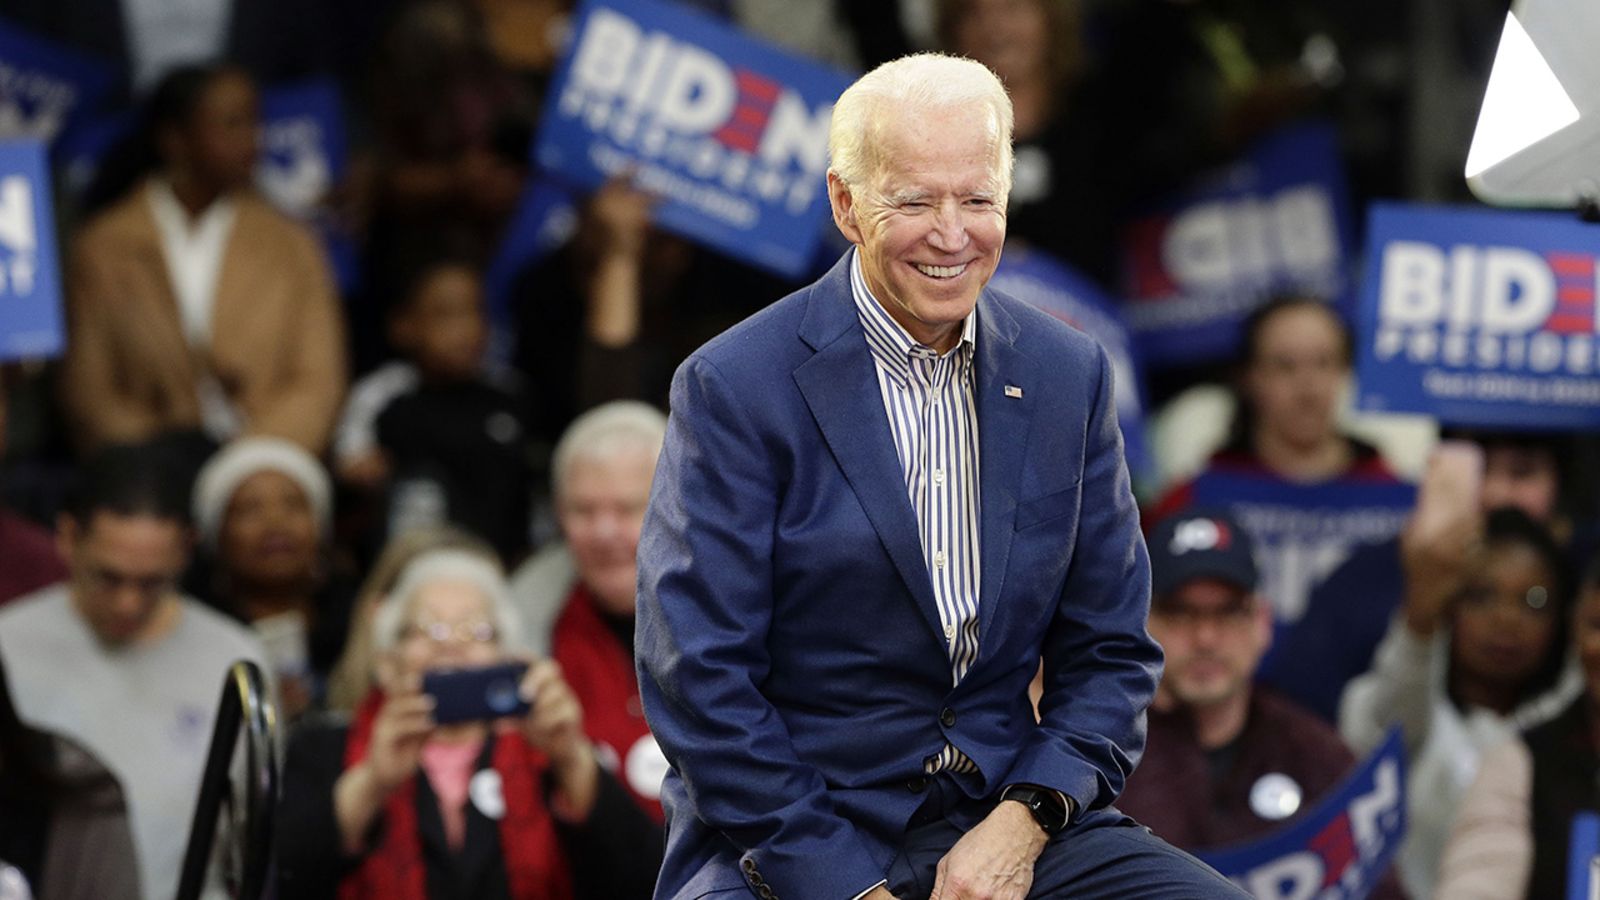 South Carolina Democratic primary: Joe Biden wins, Bernie